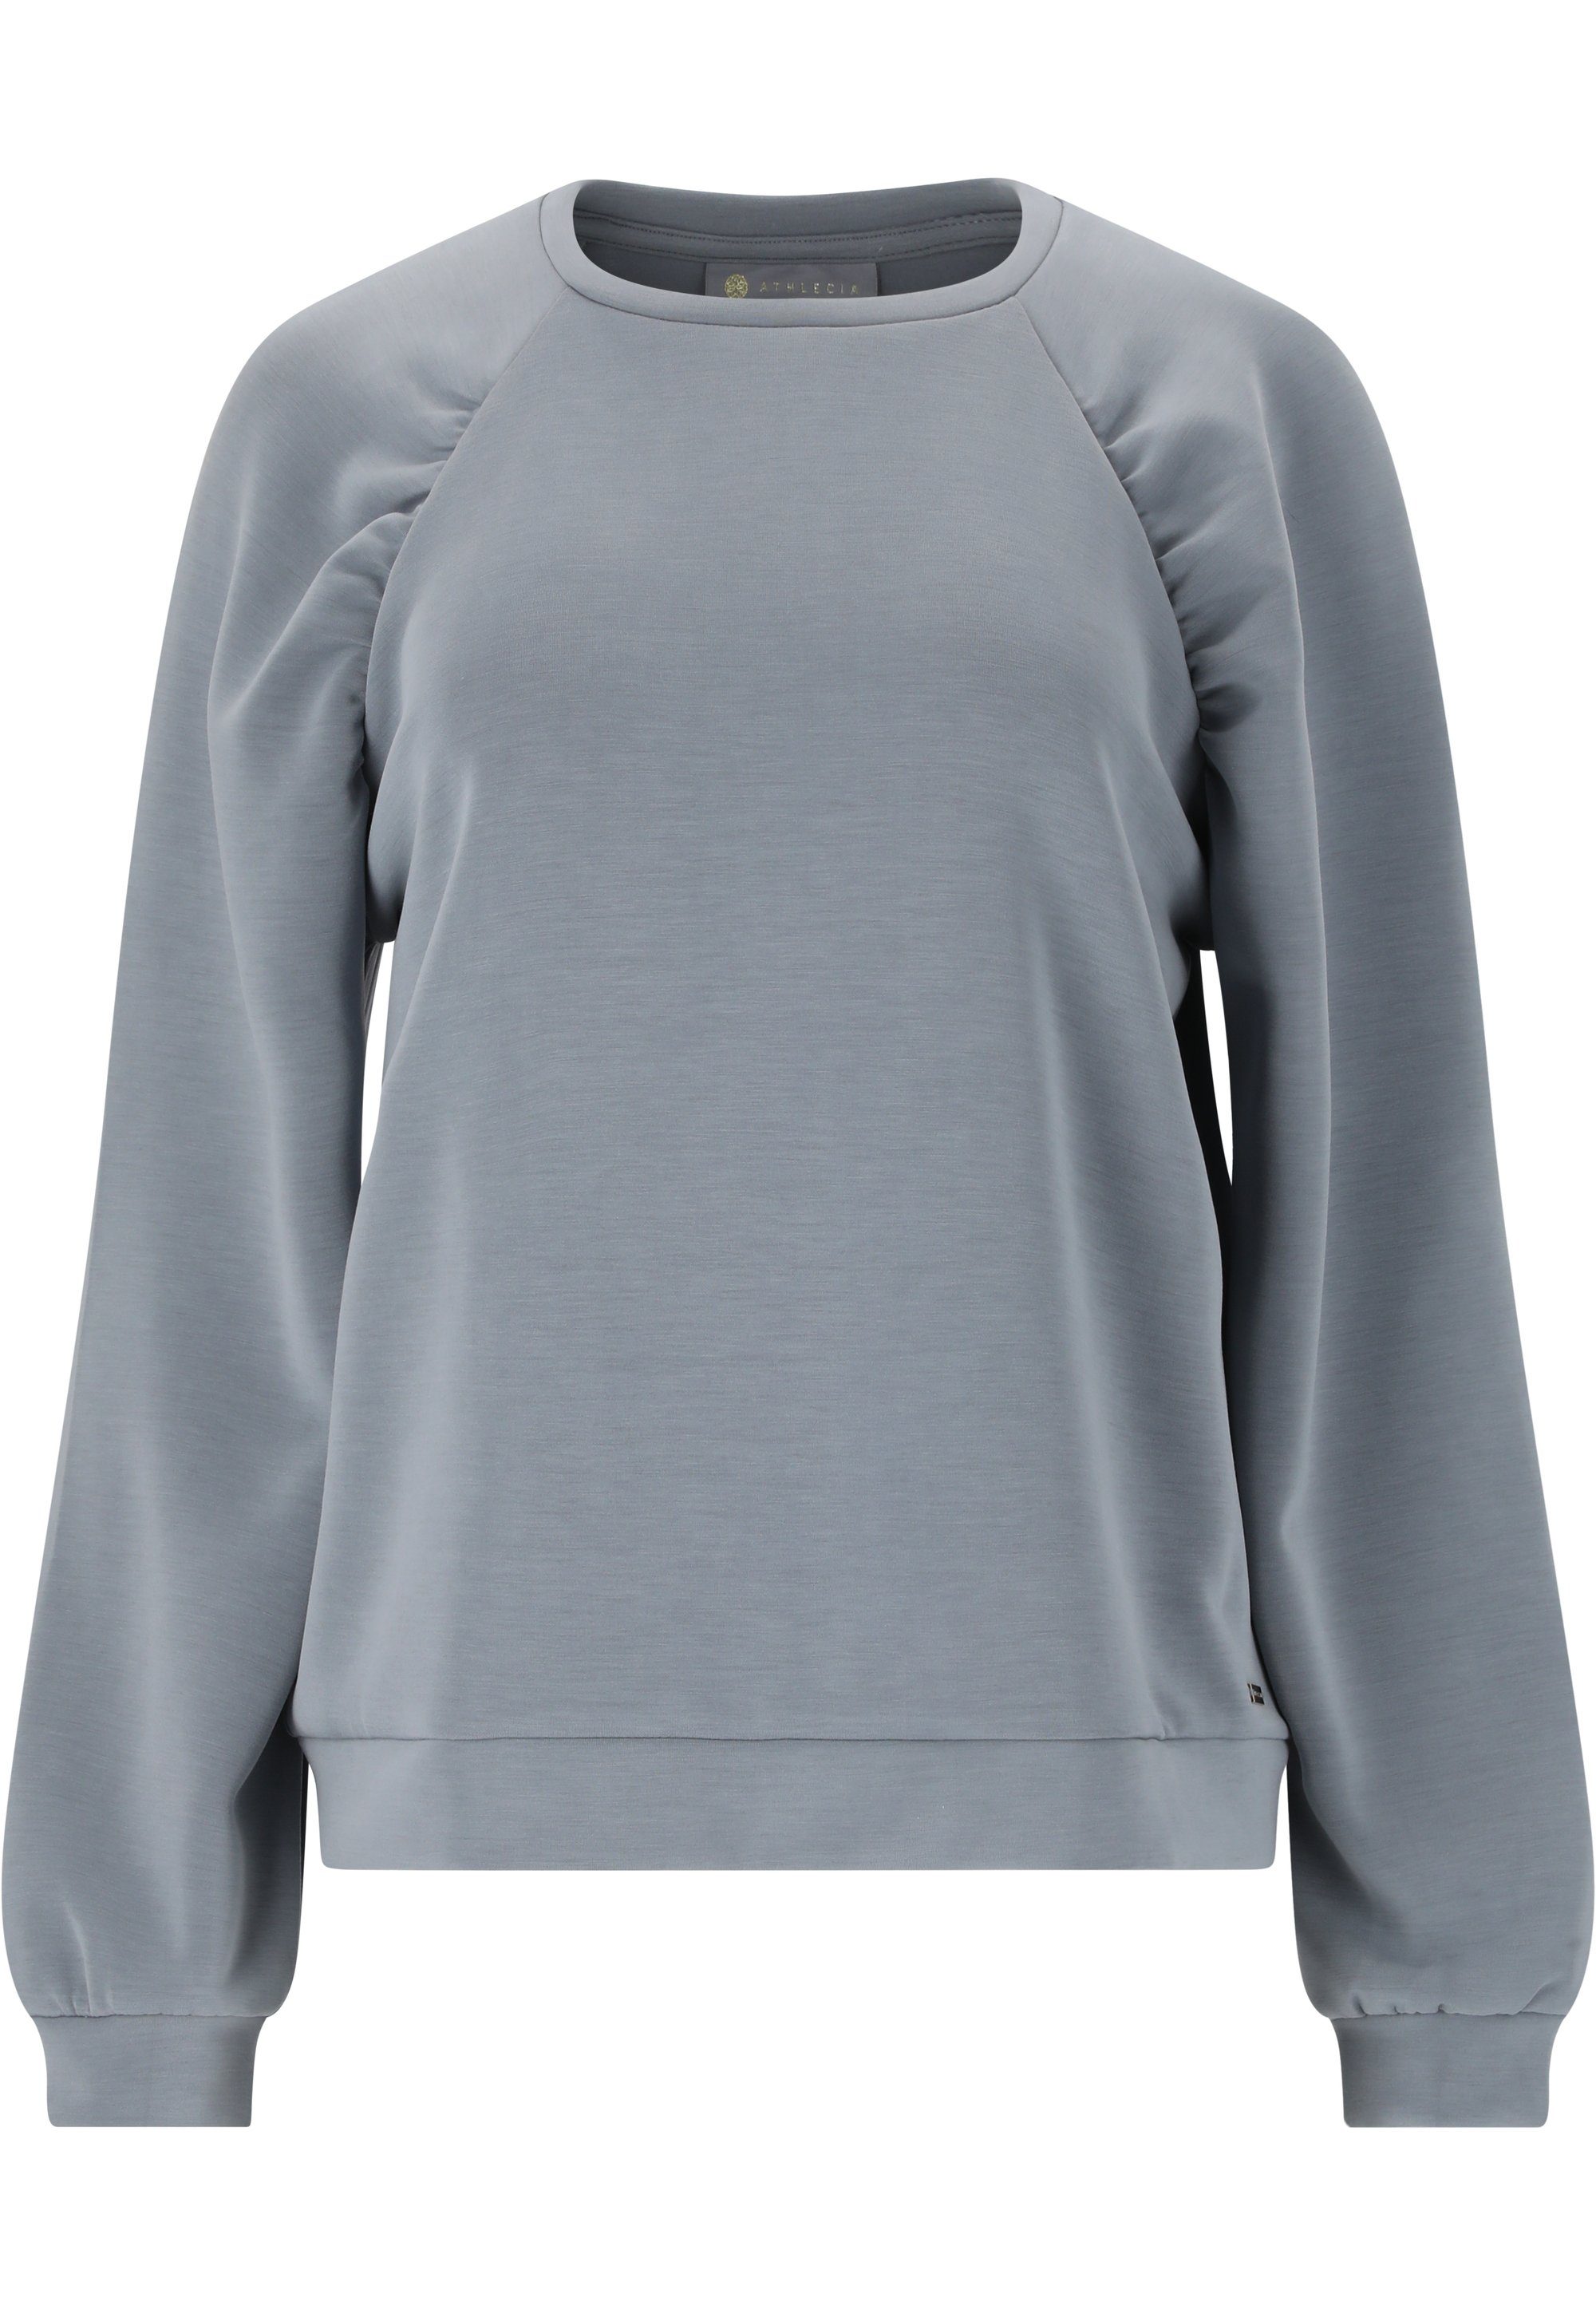 ATHLECIA Sweatshirt Jillnana in schlichtem Design hellblau